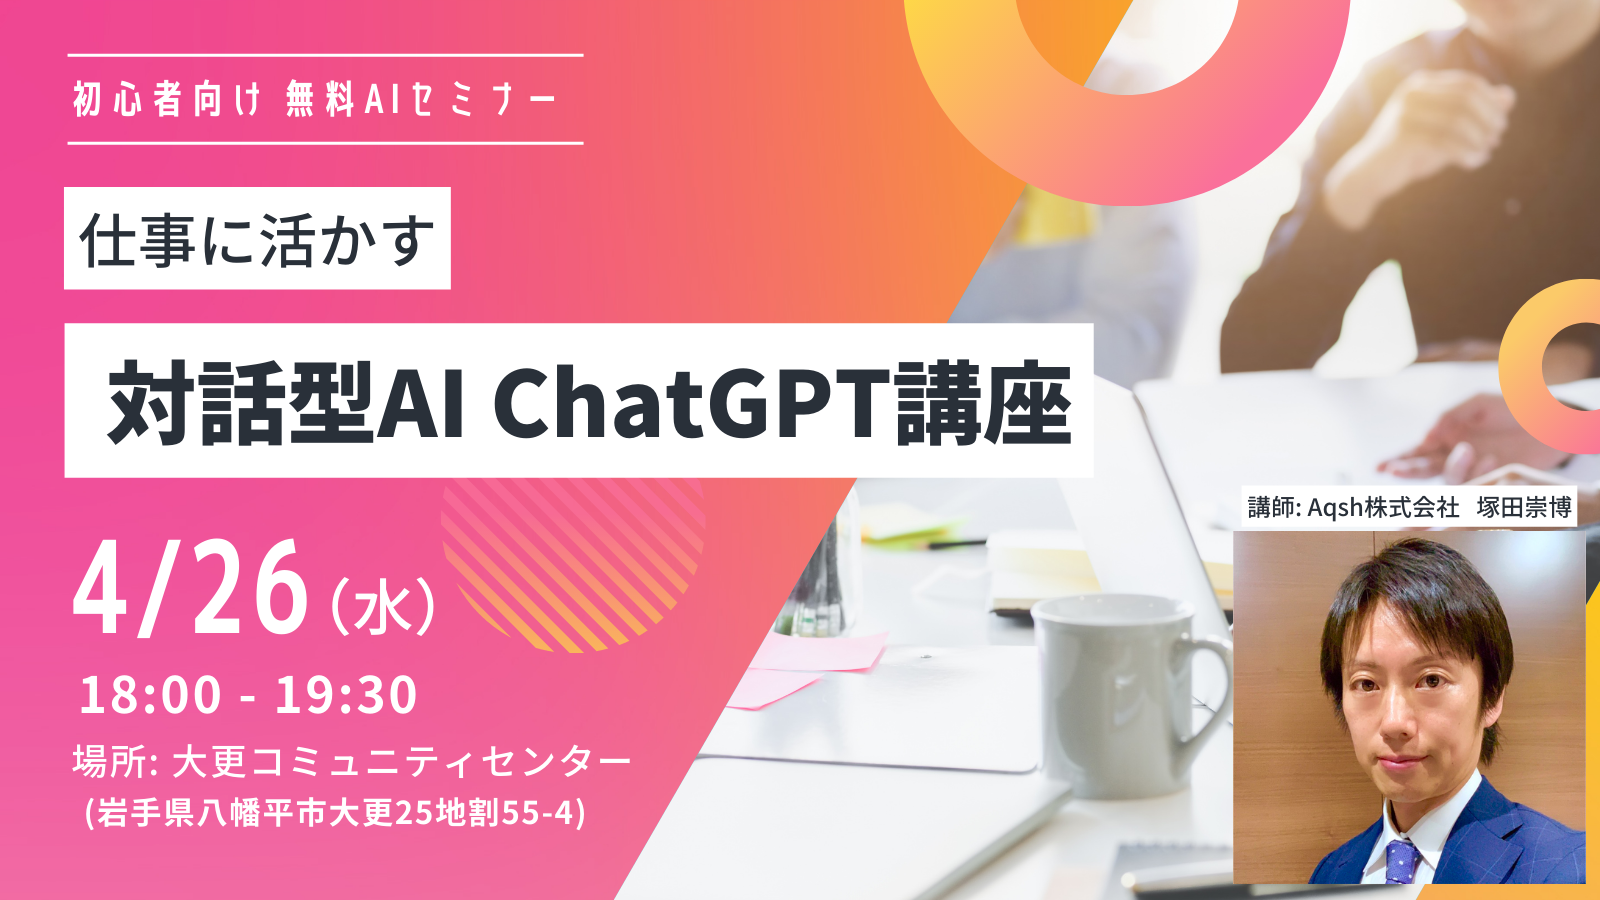 対話型AI ChatGPT 無料講座